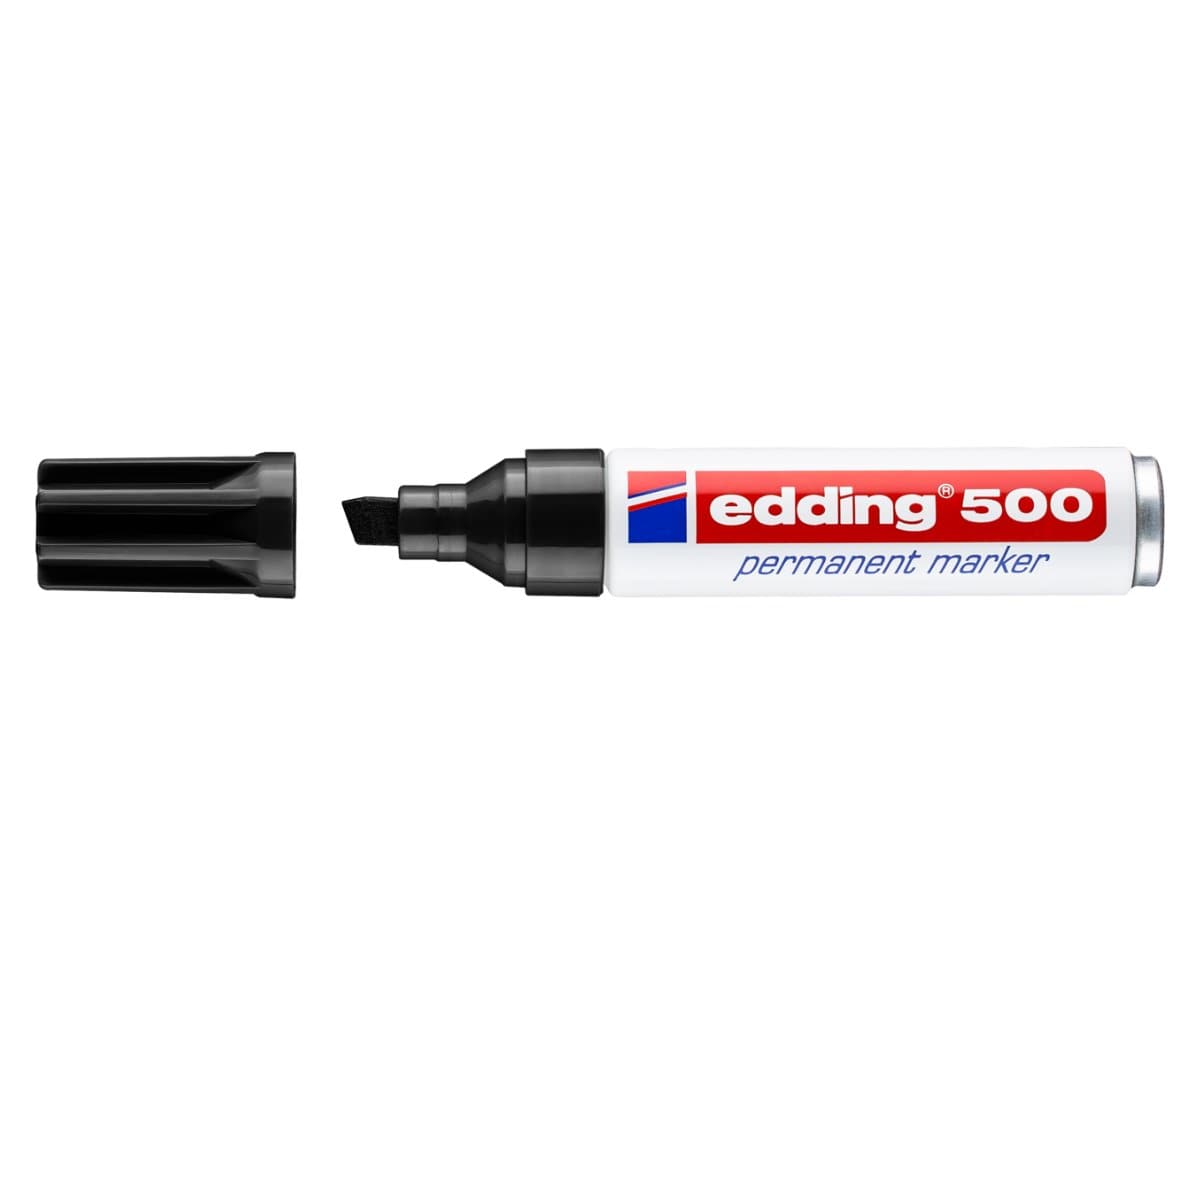 edding 500 Permanent Marker, 2-7mm Chisel Tip, Black